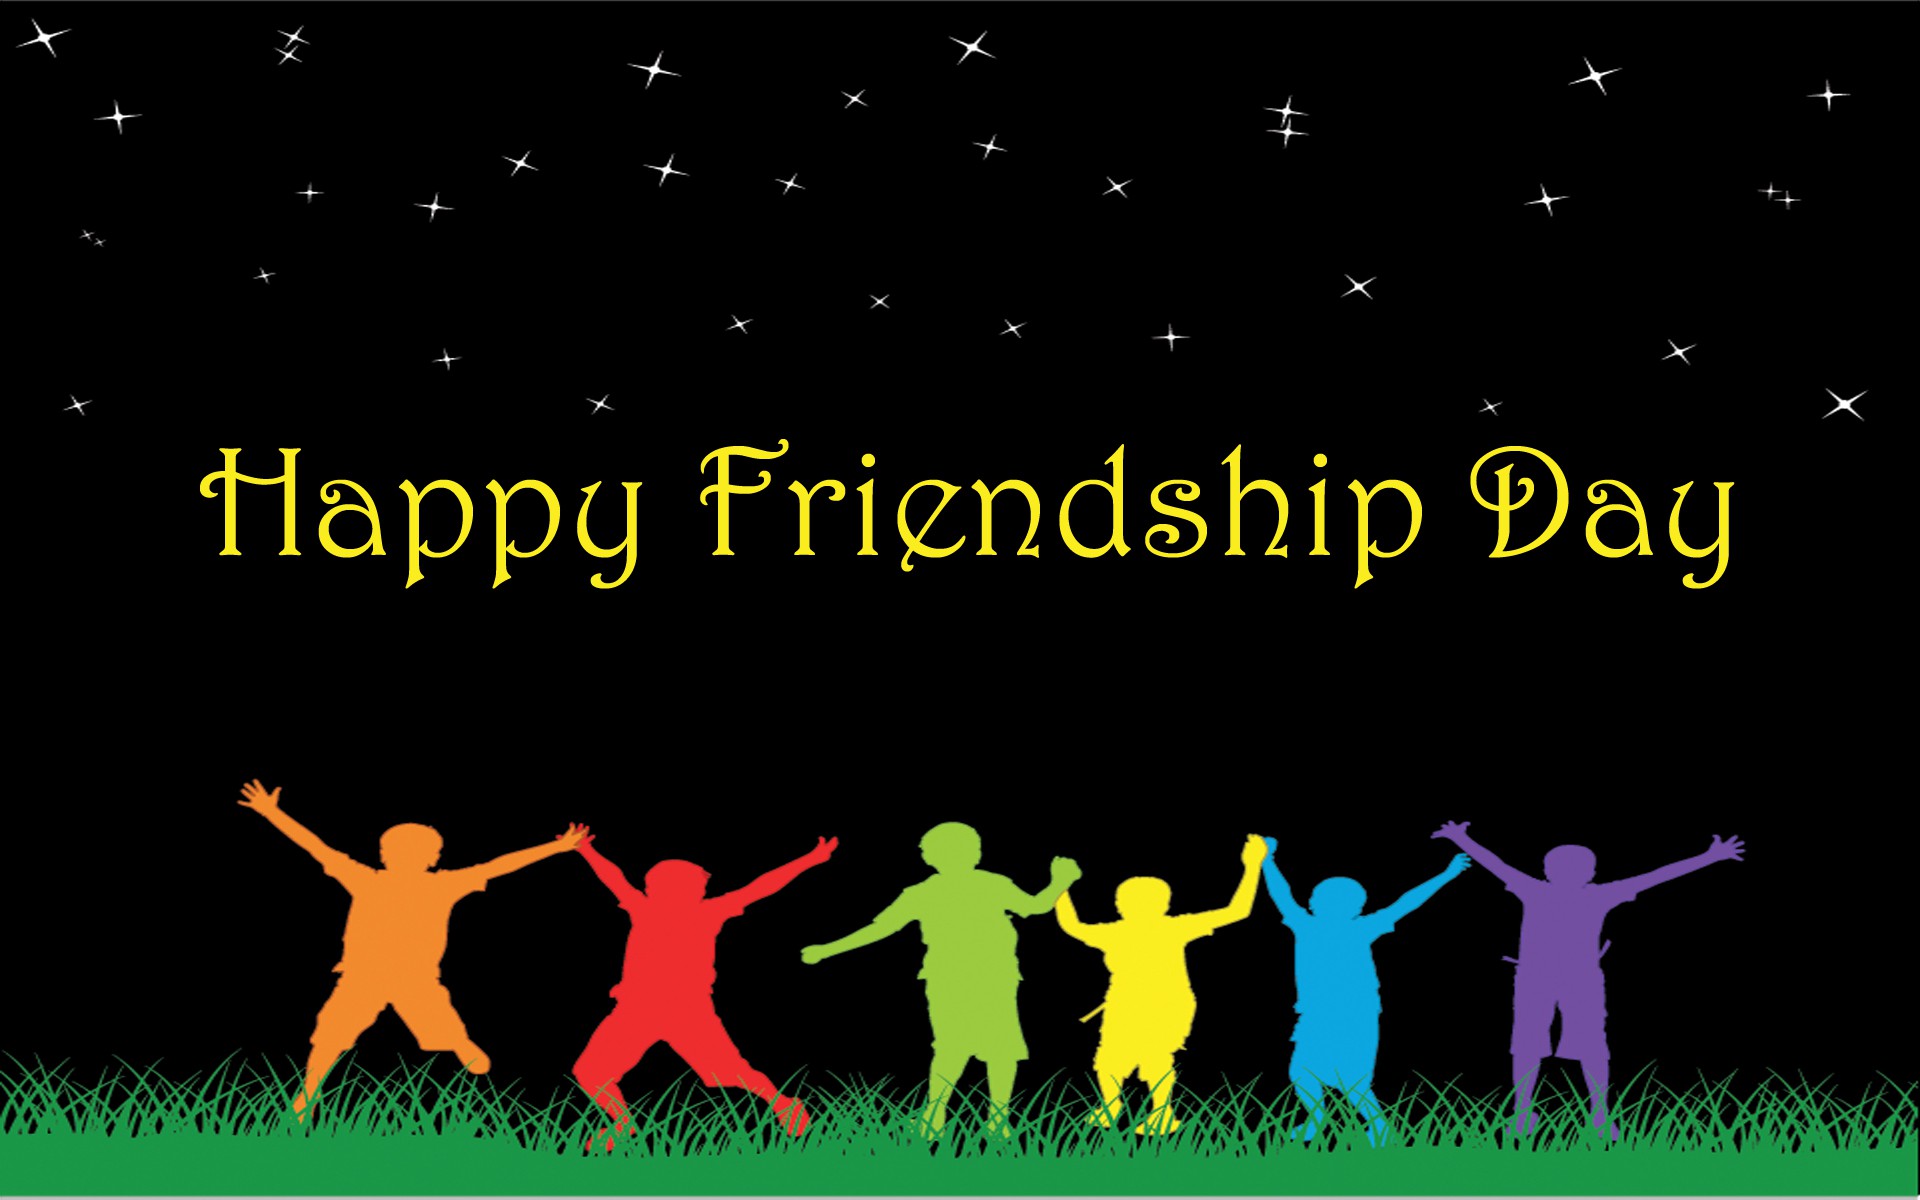 Friendship Day HD Wallpaper New